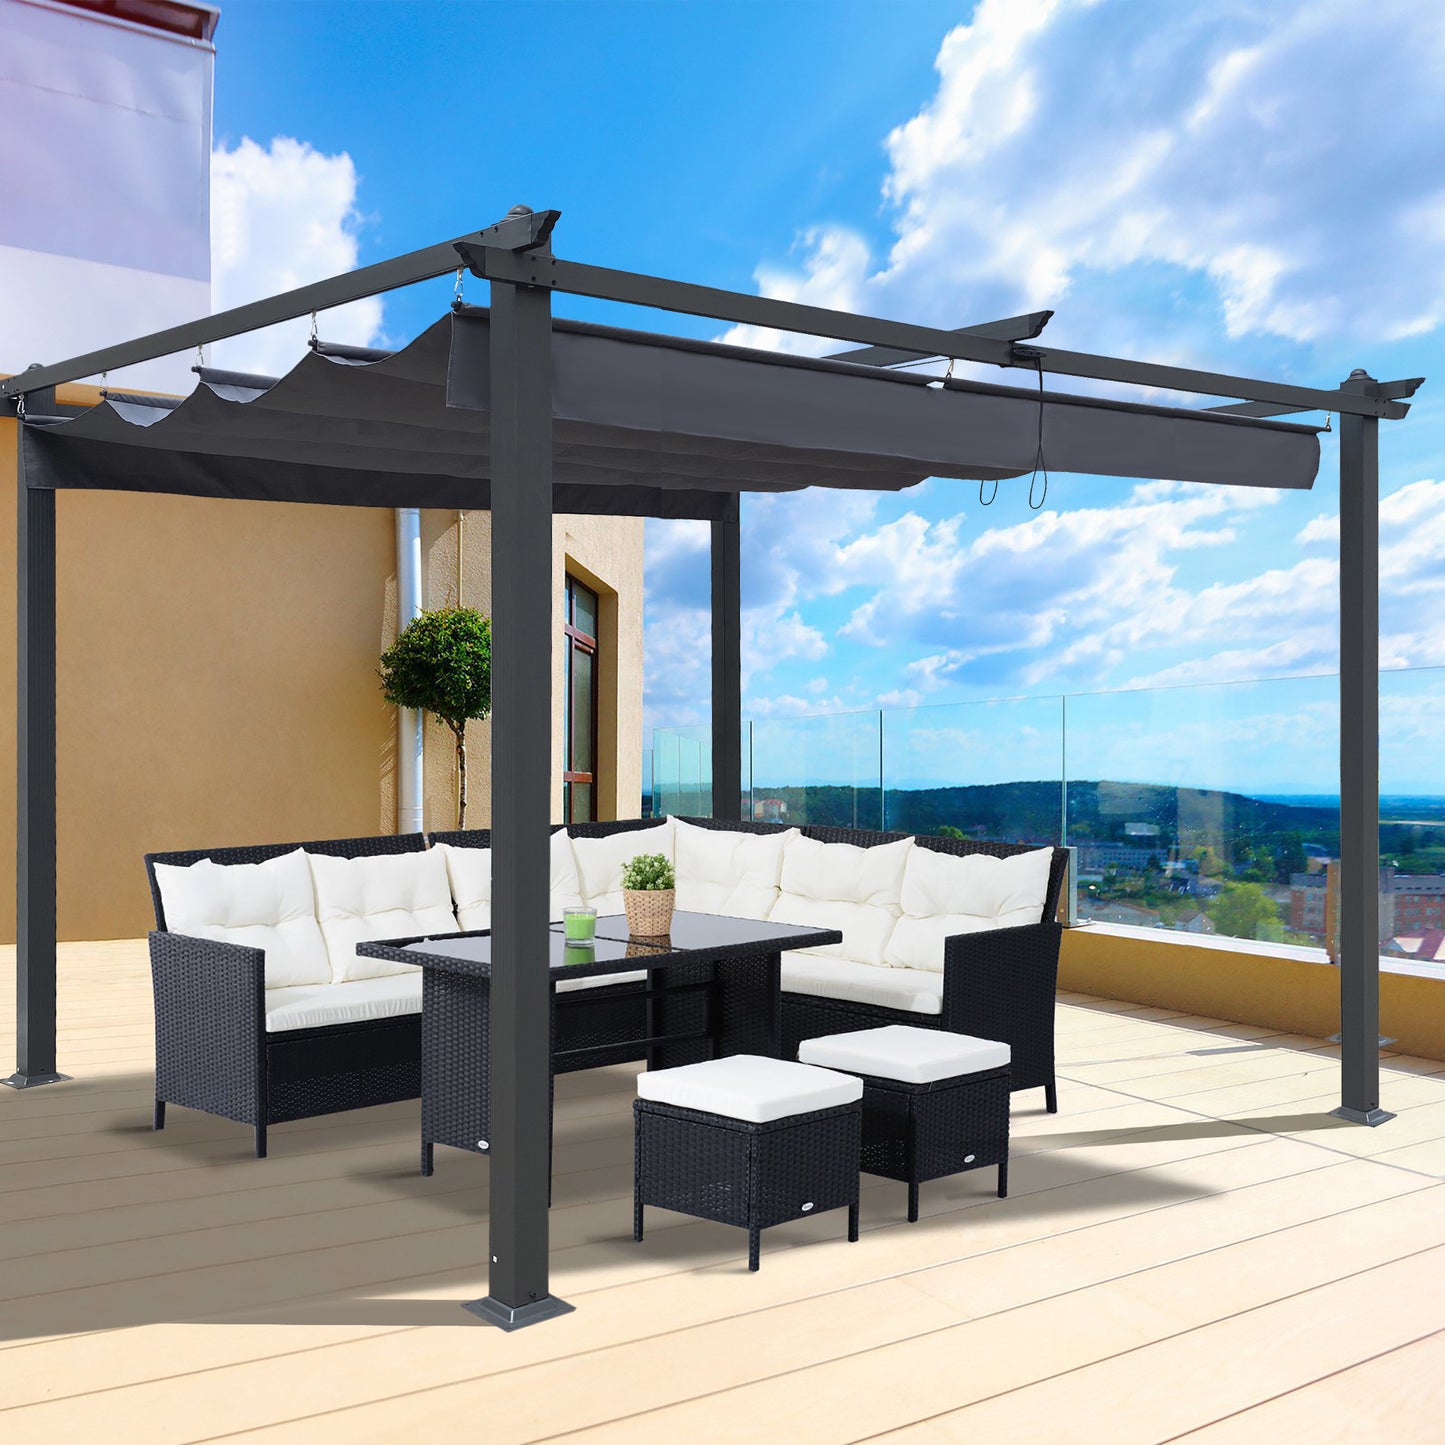 13x10 Ft Outdoor Patio Retractable Pergola With Canopy Sunshelter Pergola for Gardens, Terraces, Backyard, Gray